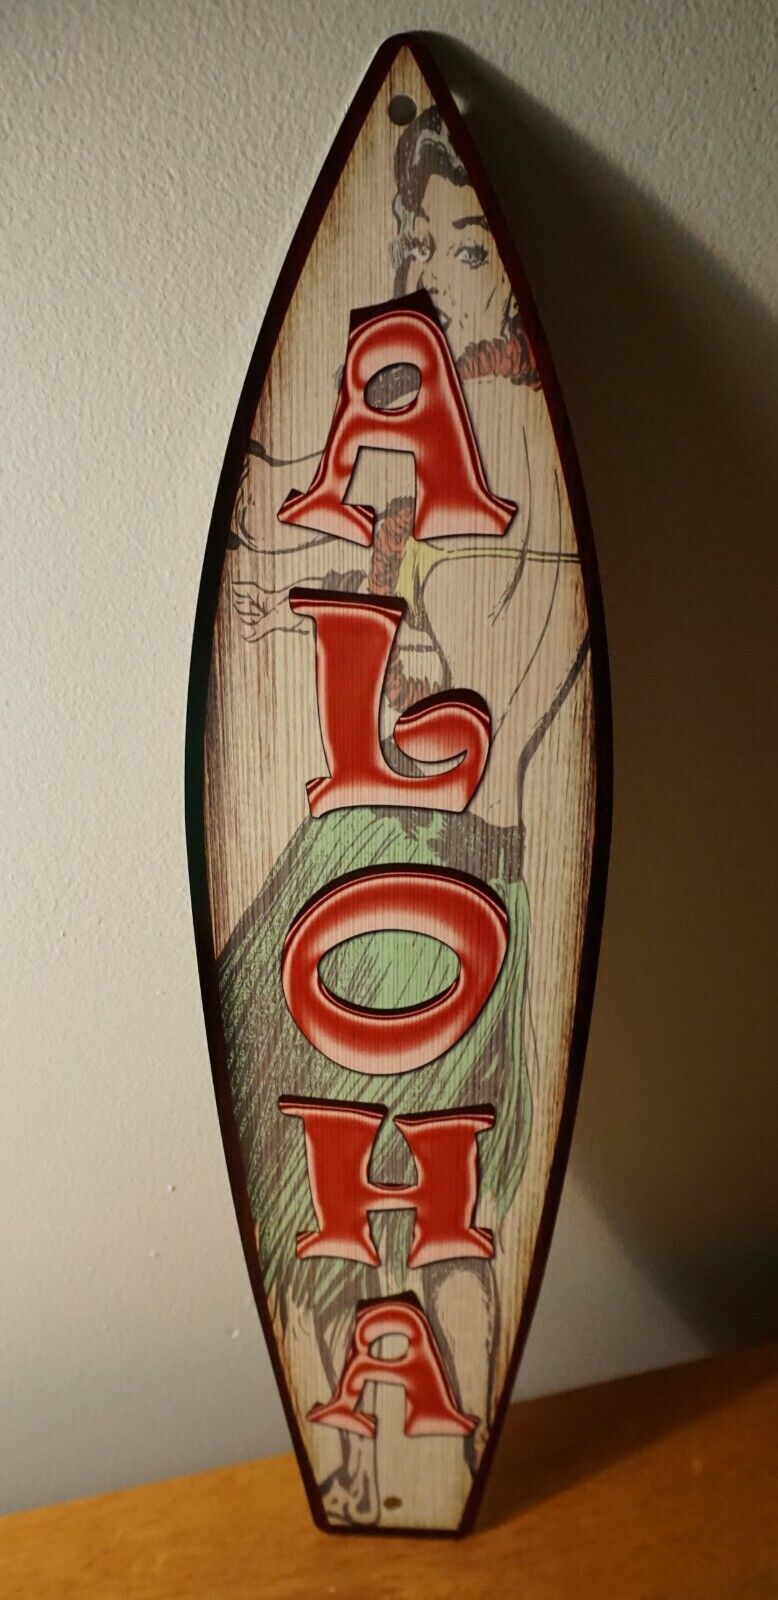 ALOHA RETRO VINTAGE STYLE HULA DANCER LUAU Tiki Bar Beach Surfboard Home Decor